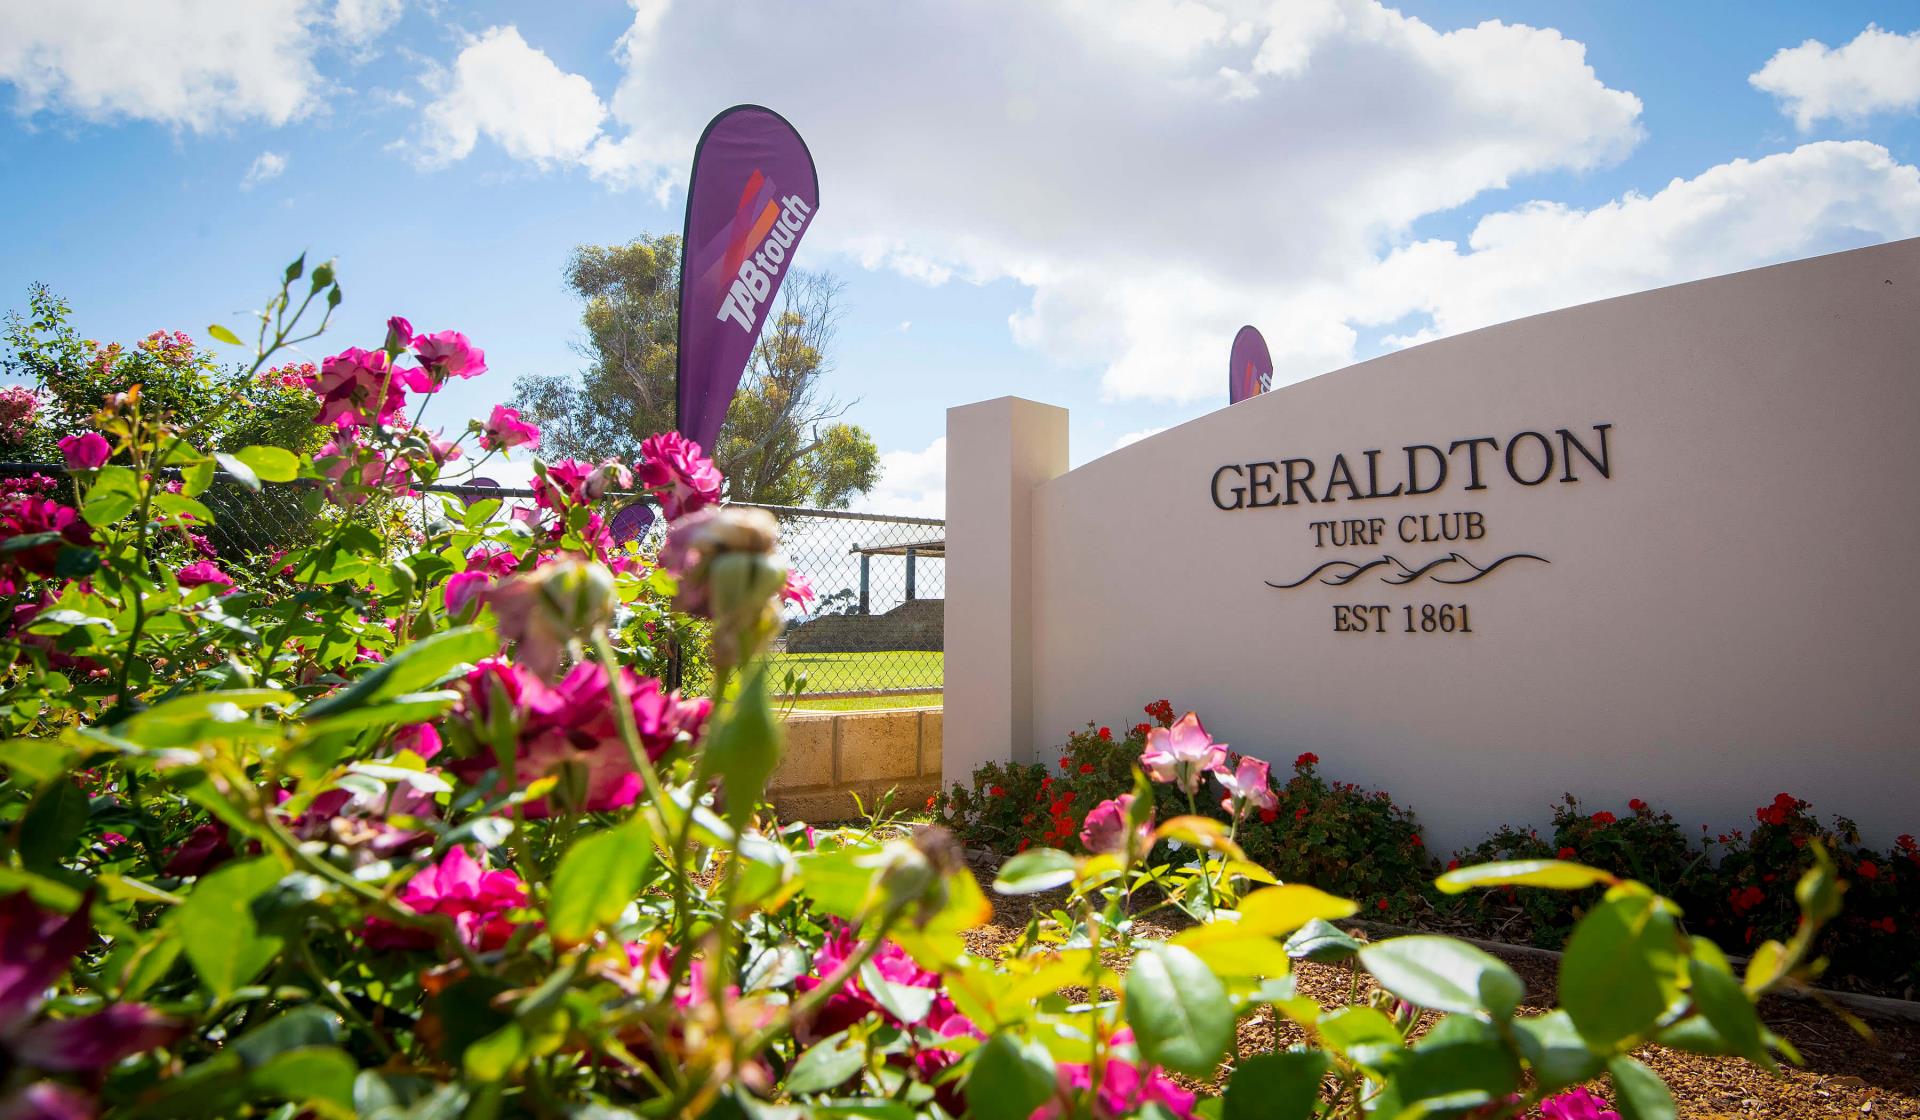 Geraldton Turf Club